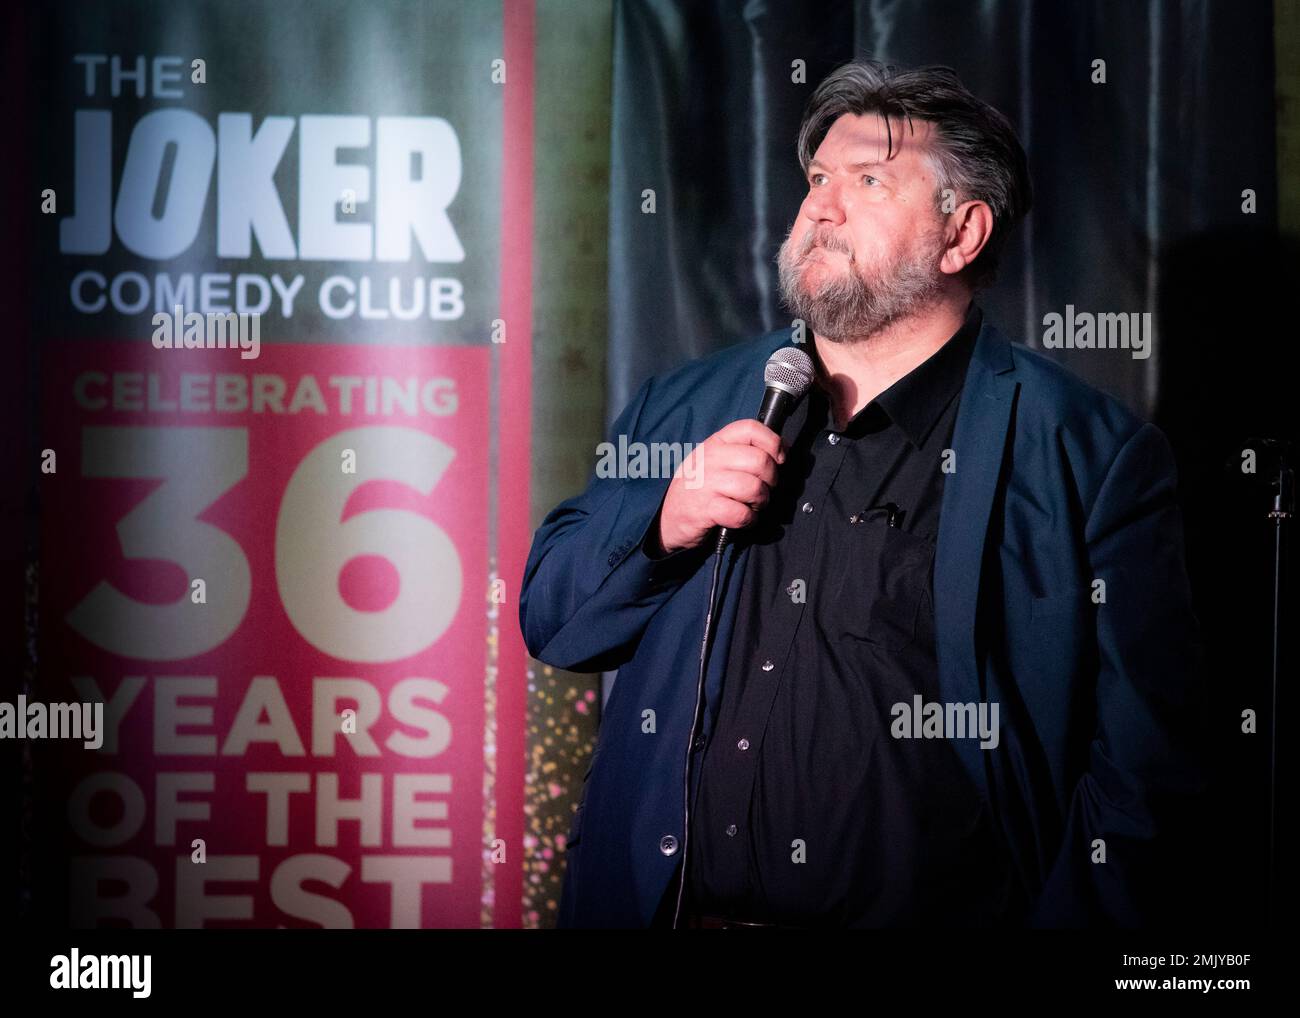 Bob Mills, Joker Comedy Club, Southend, Essex © Clarissa Debenham/Alamy Stockfoto